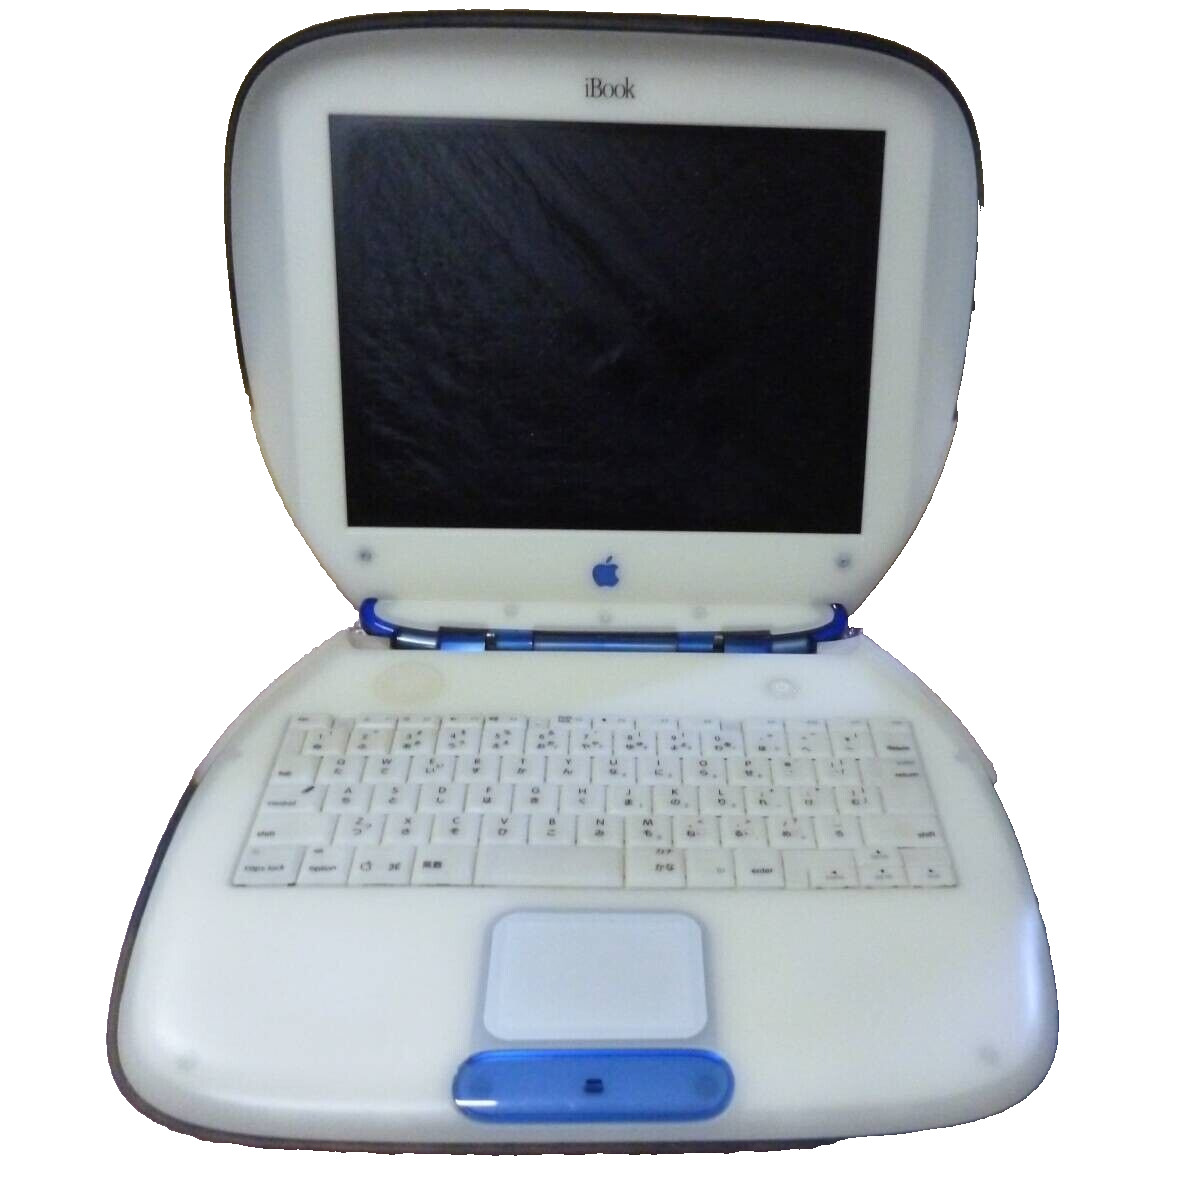 Apple iBook G3 M2453 Clamshell Graphite Laptop Memory 128MB OS 9.2.2 Vintage JP